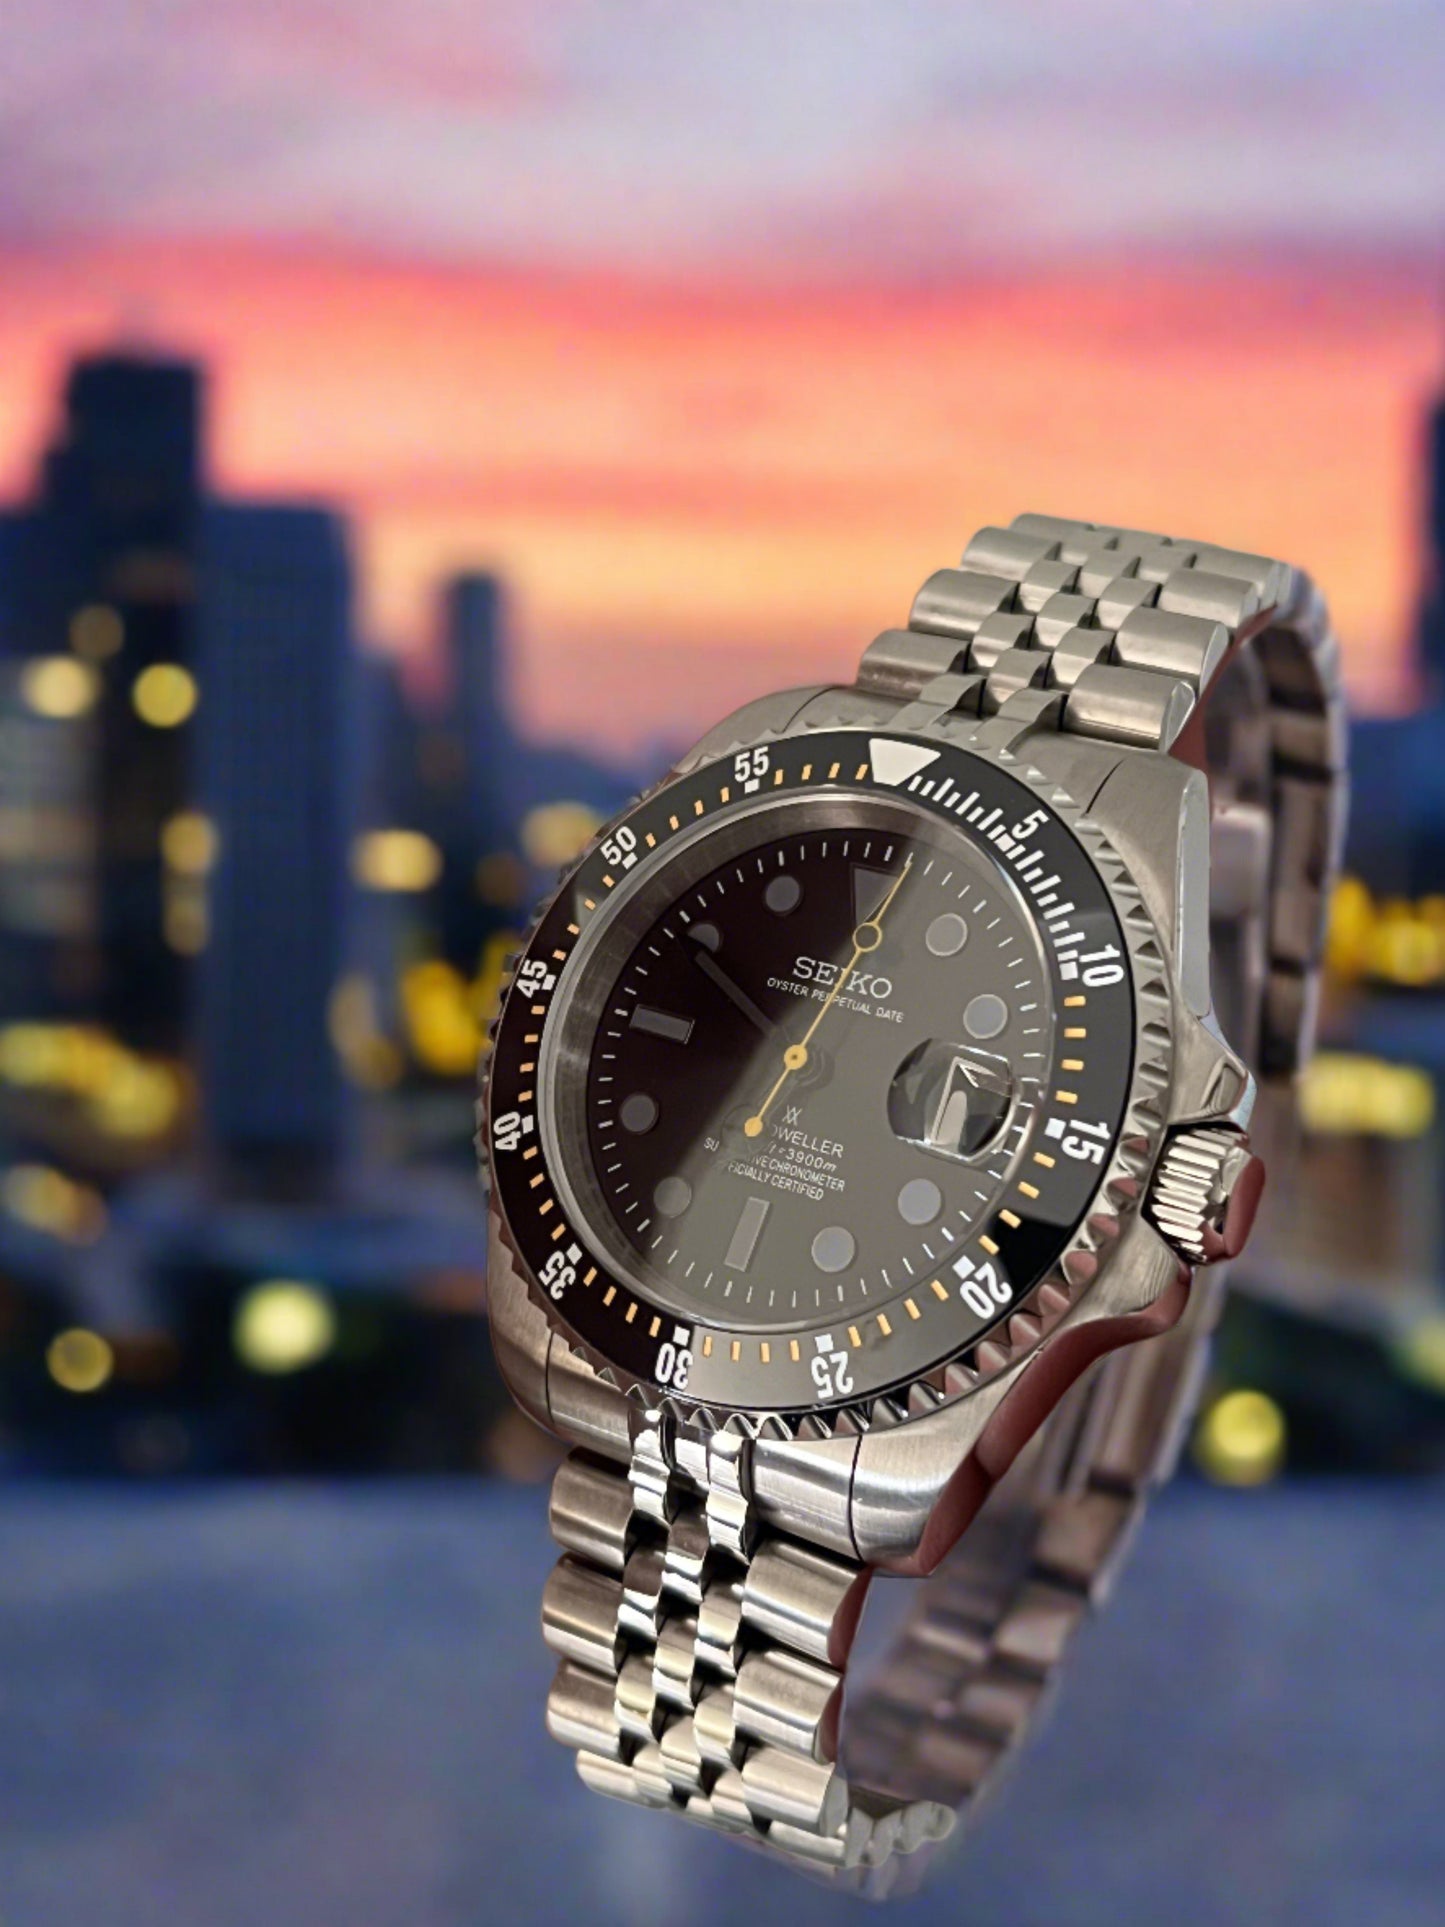 41mm Seiko mod sea dweller tach automatic watch